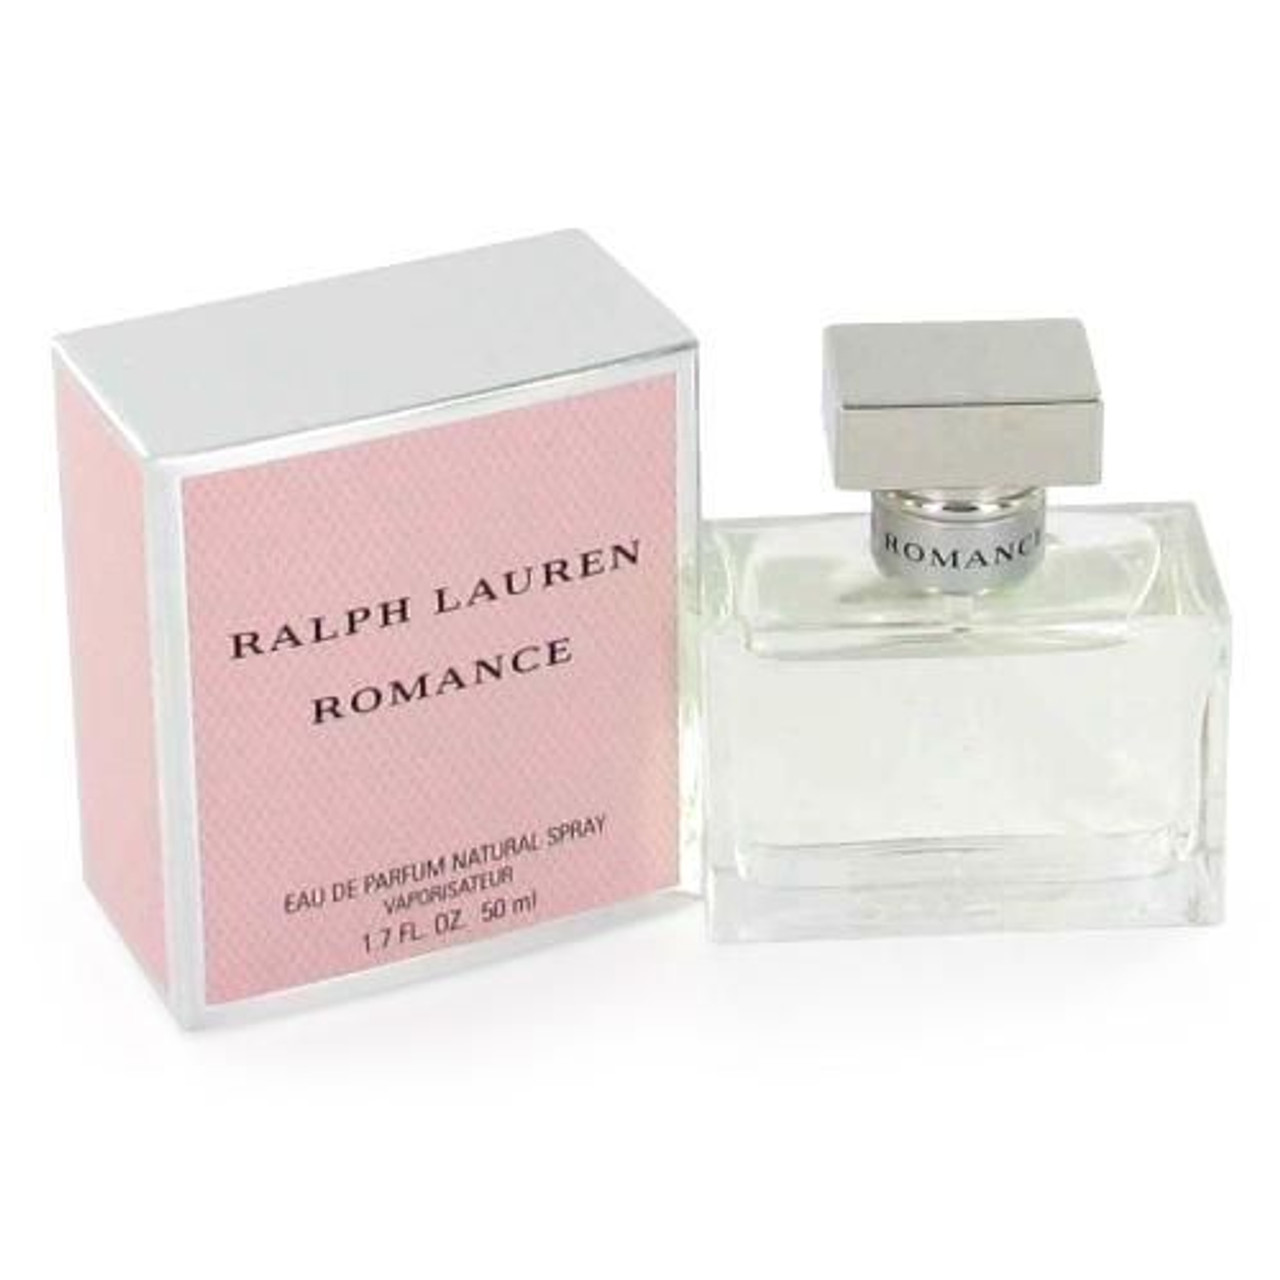 Romance 1.7 Oz Eau De Parfum Spray by Ralph Lauren NEW Box for Women